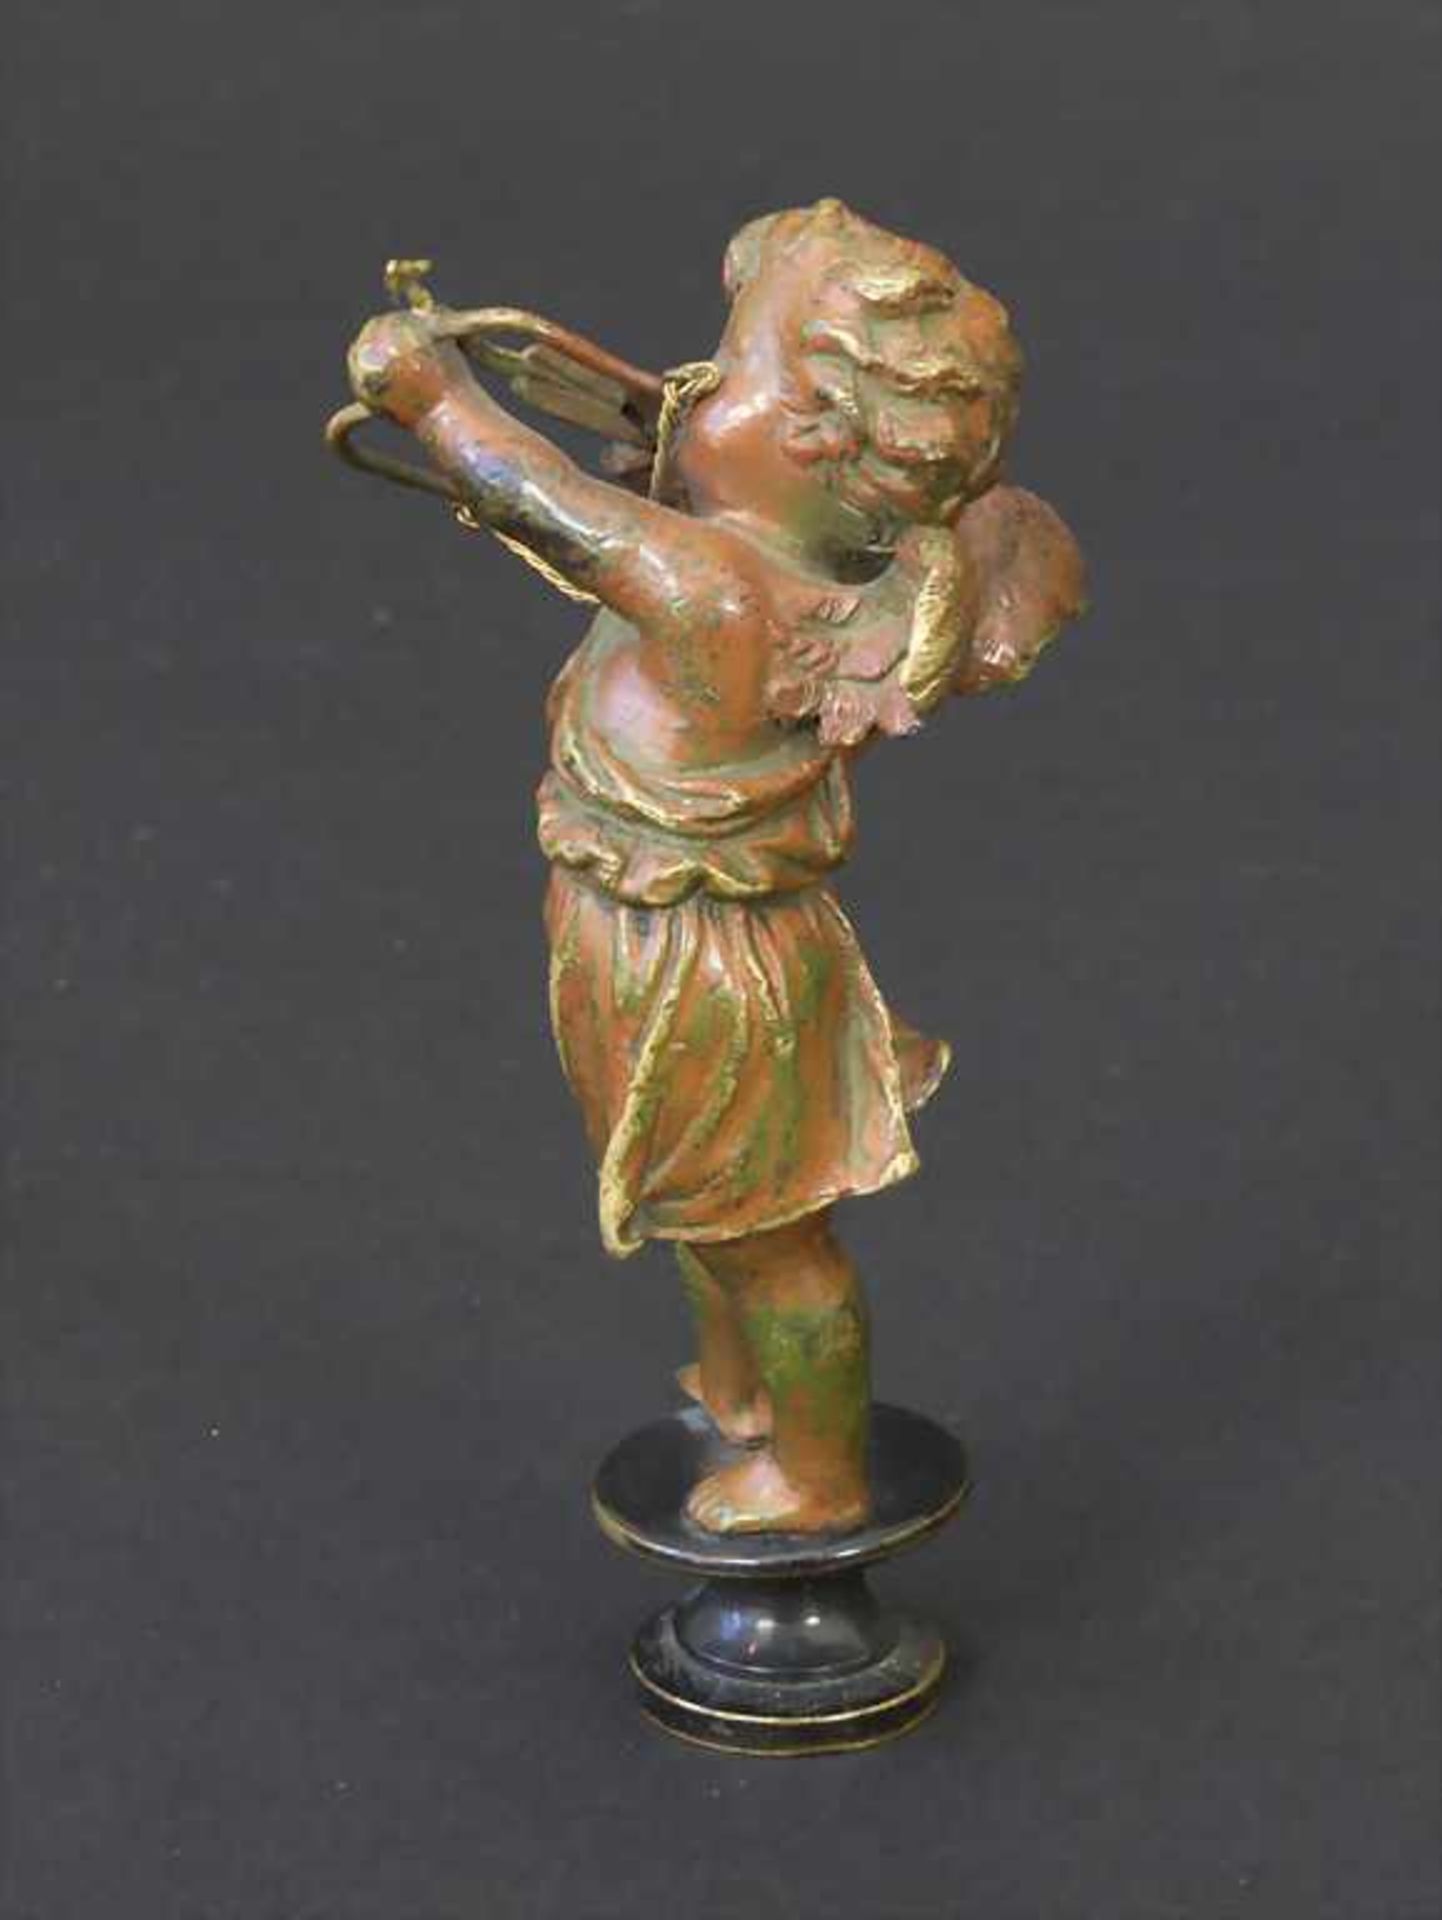 Amorette Petschaft / A seal (cupid), deutsch, um 1900Material: Bronze farbig gefasst,Höhe: 8,5 cm, - Image 2 of 3